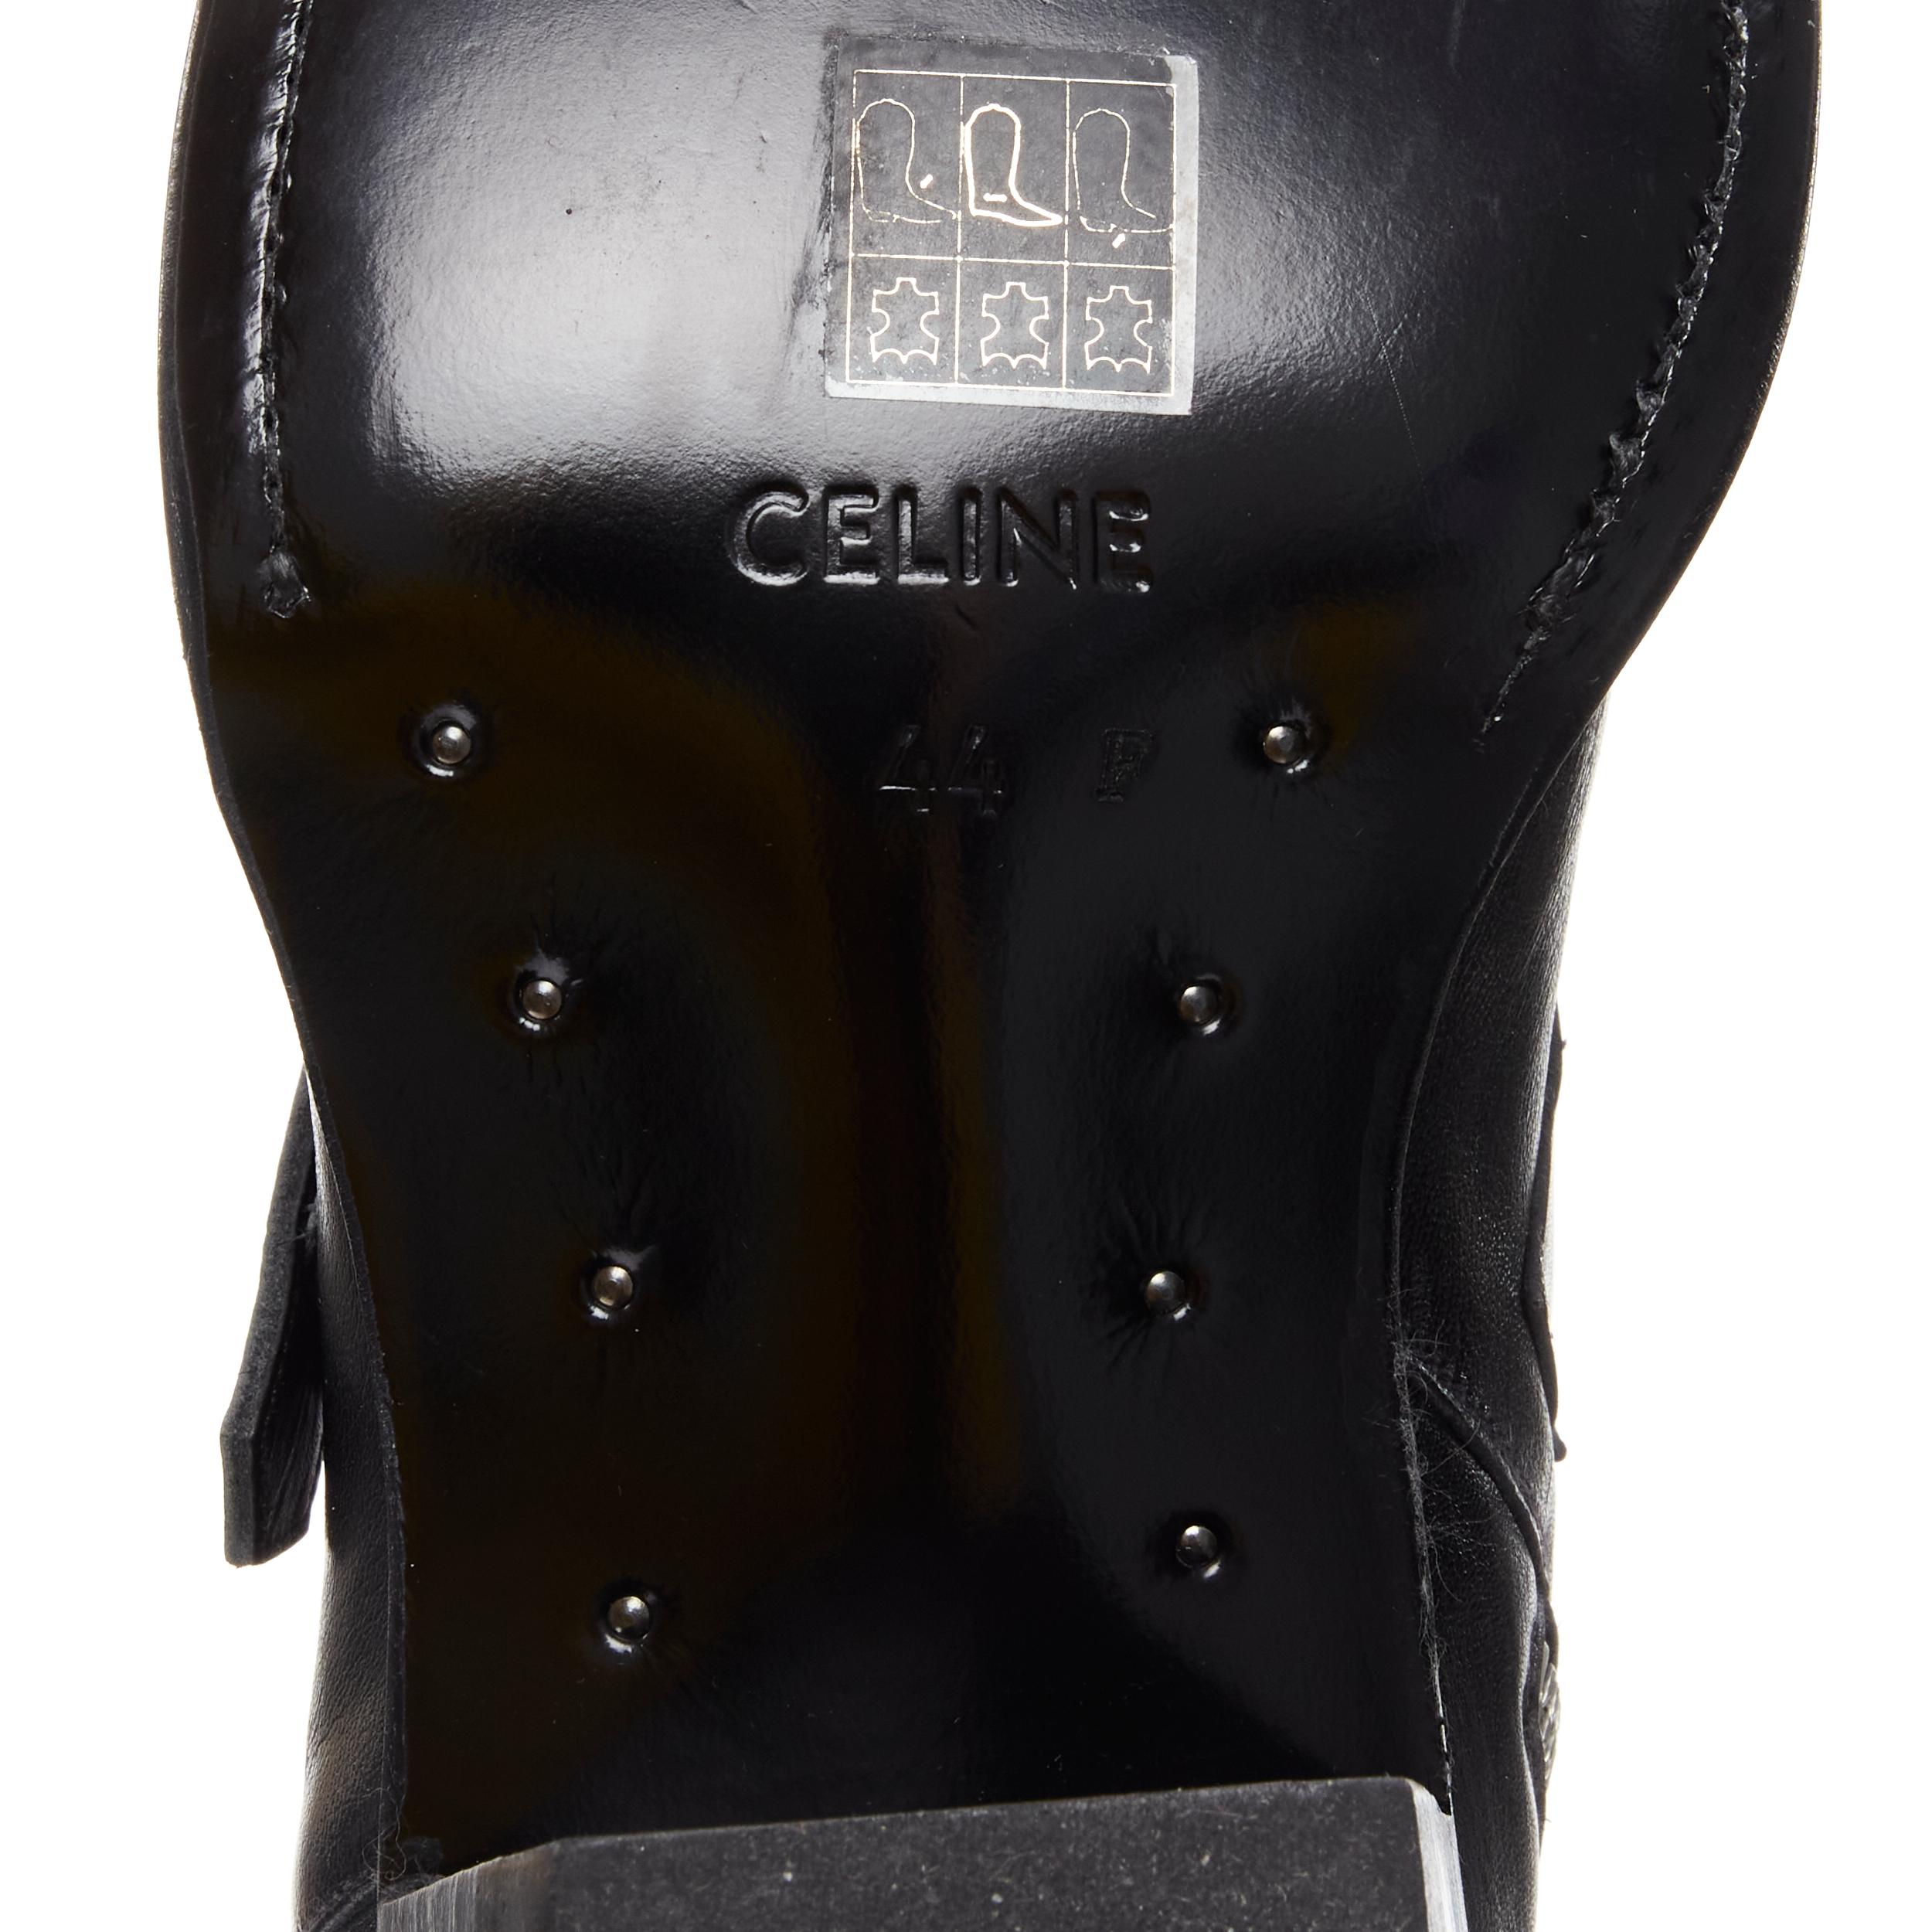 new CELINE Hedi Slimane 2019 Berlin black leather buckle western ankle boot EU44 4